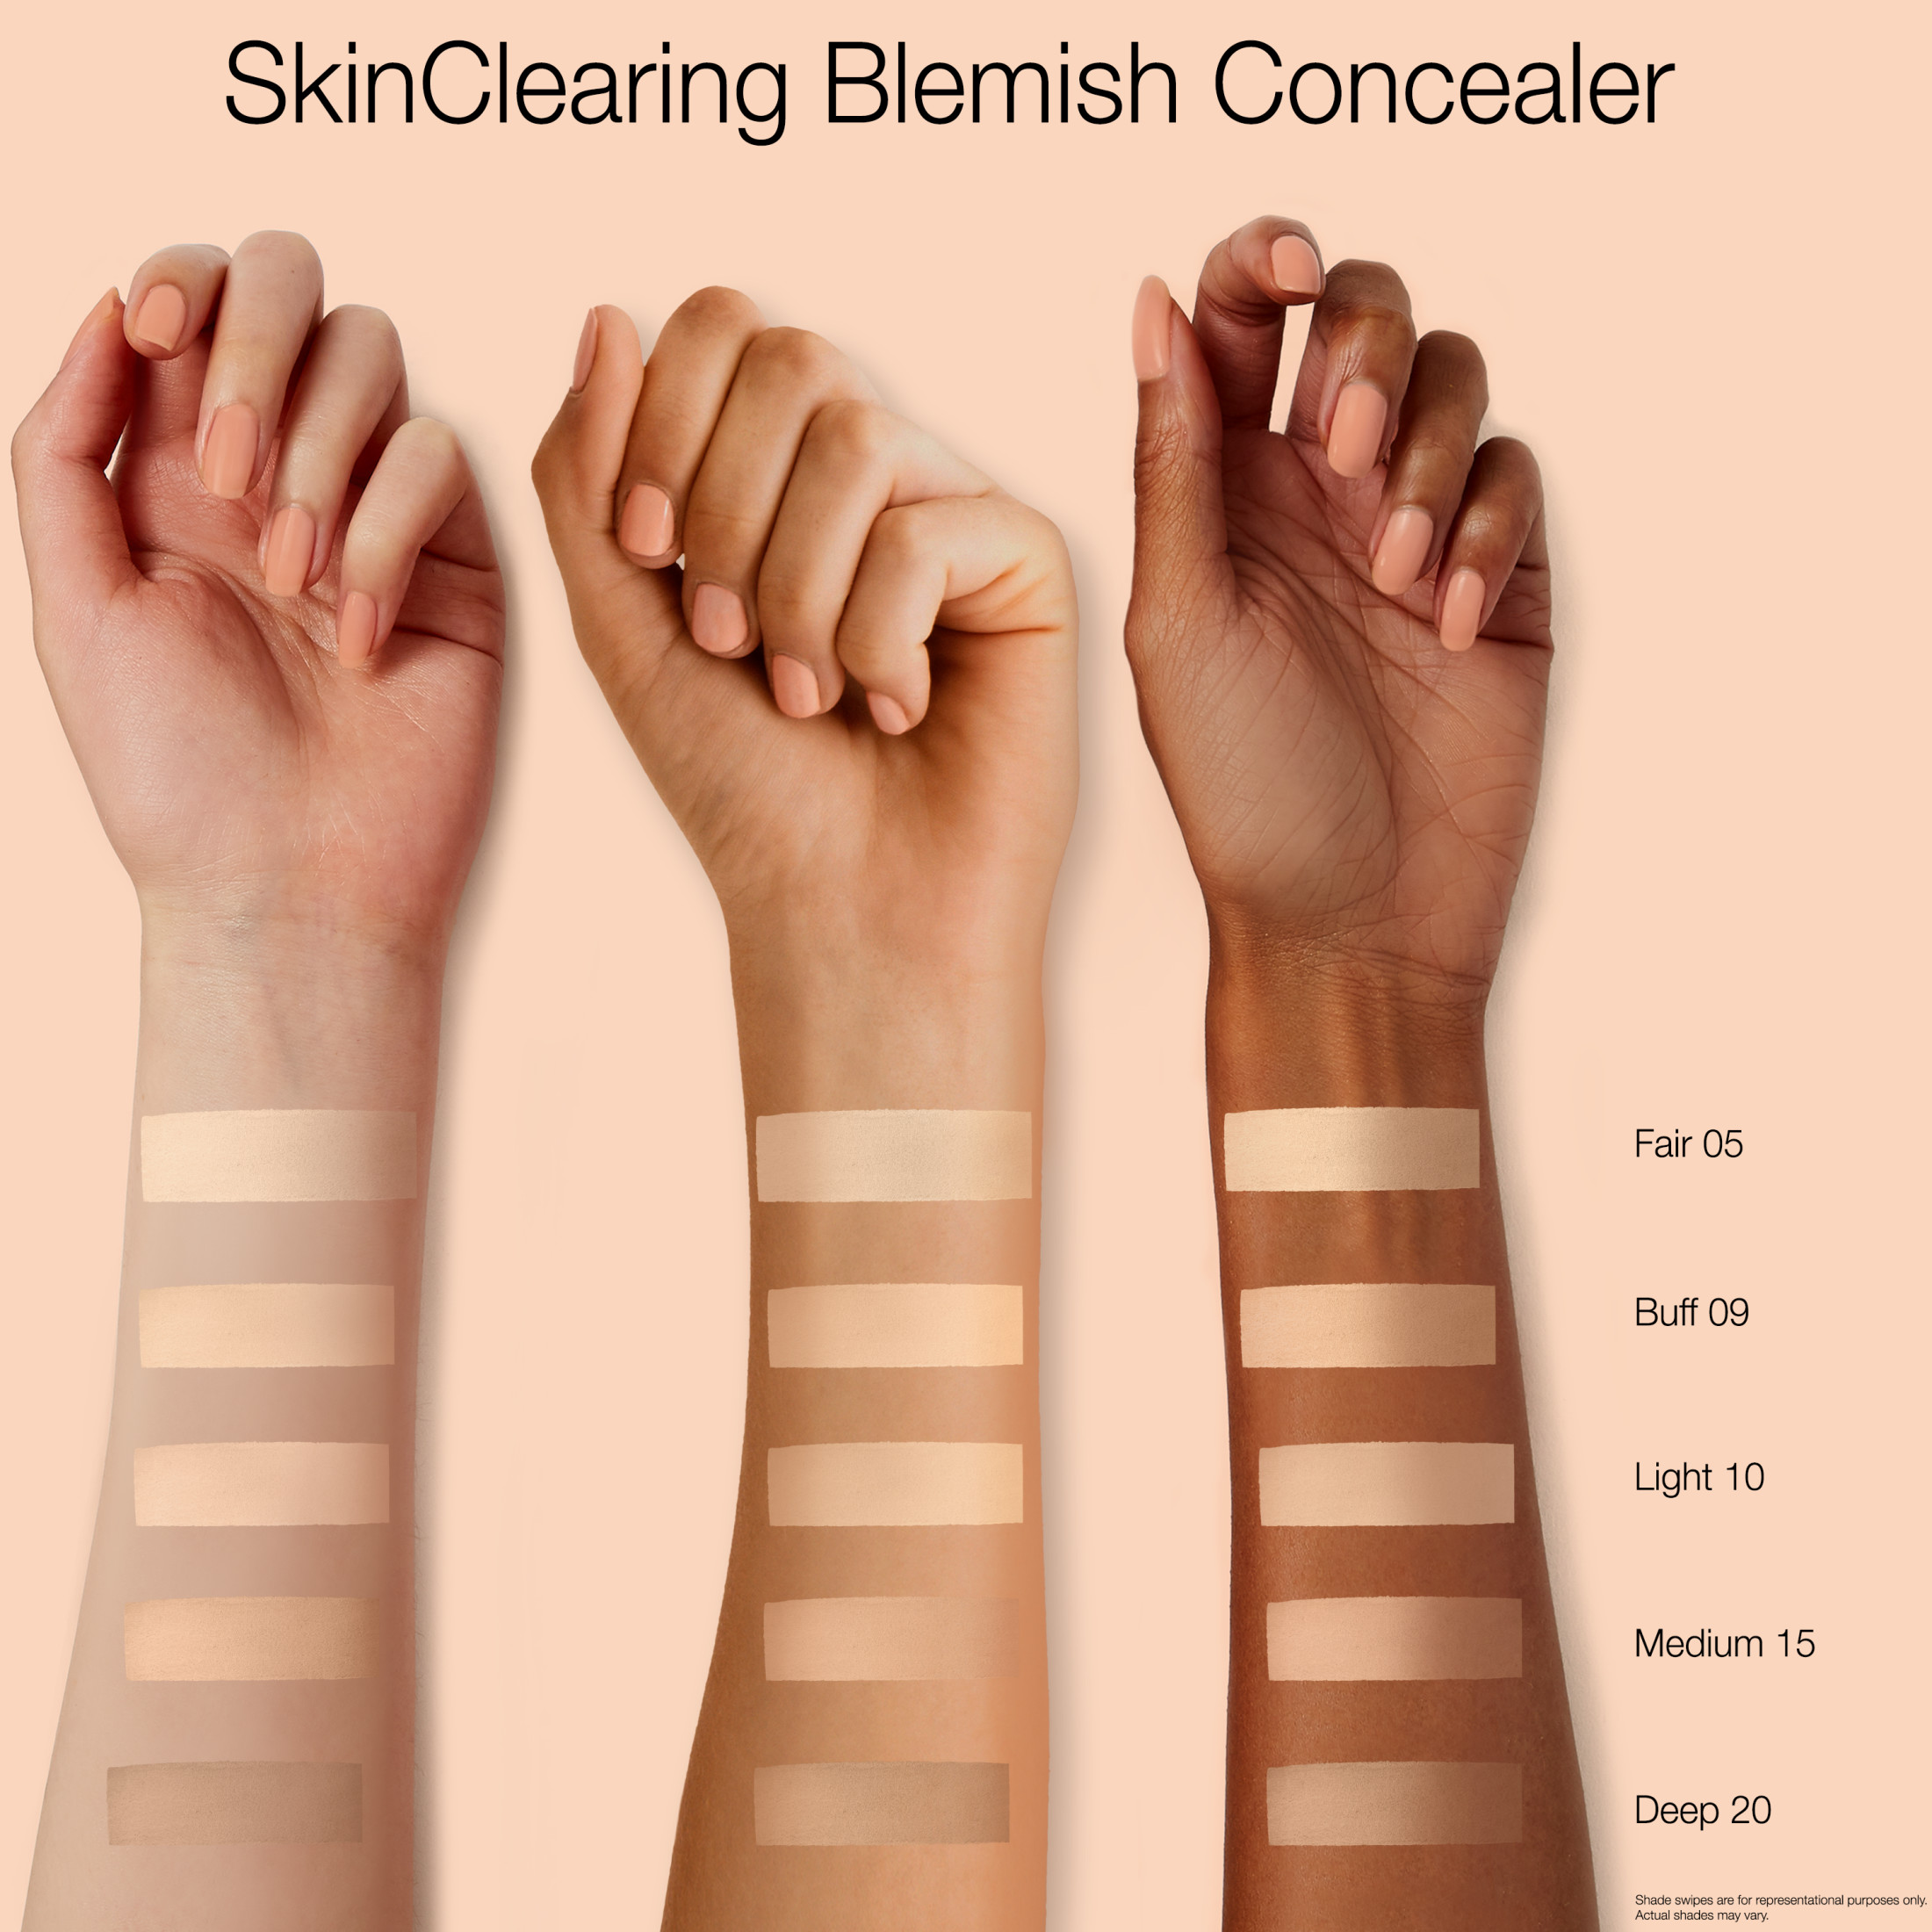 Neutrogena SkinClearing Blemish Concealer Makeup, Fair 05,.05 oz - image 4 of 11